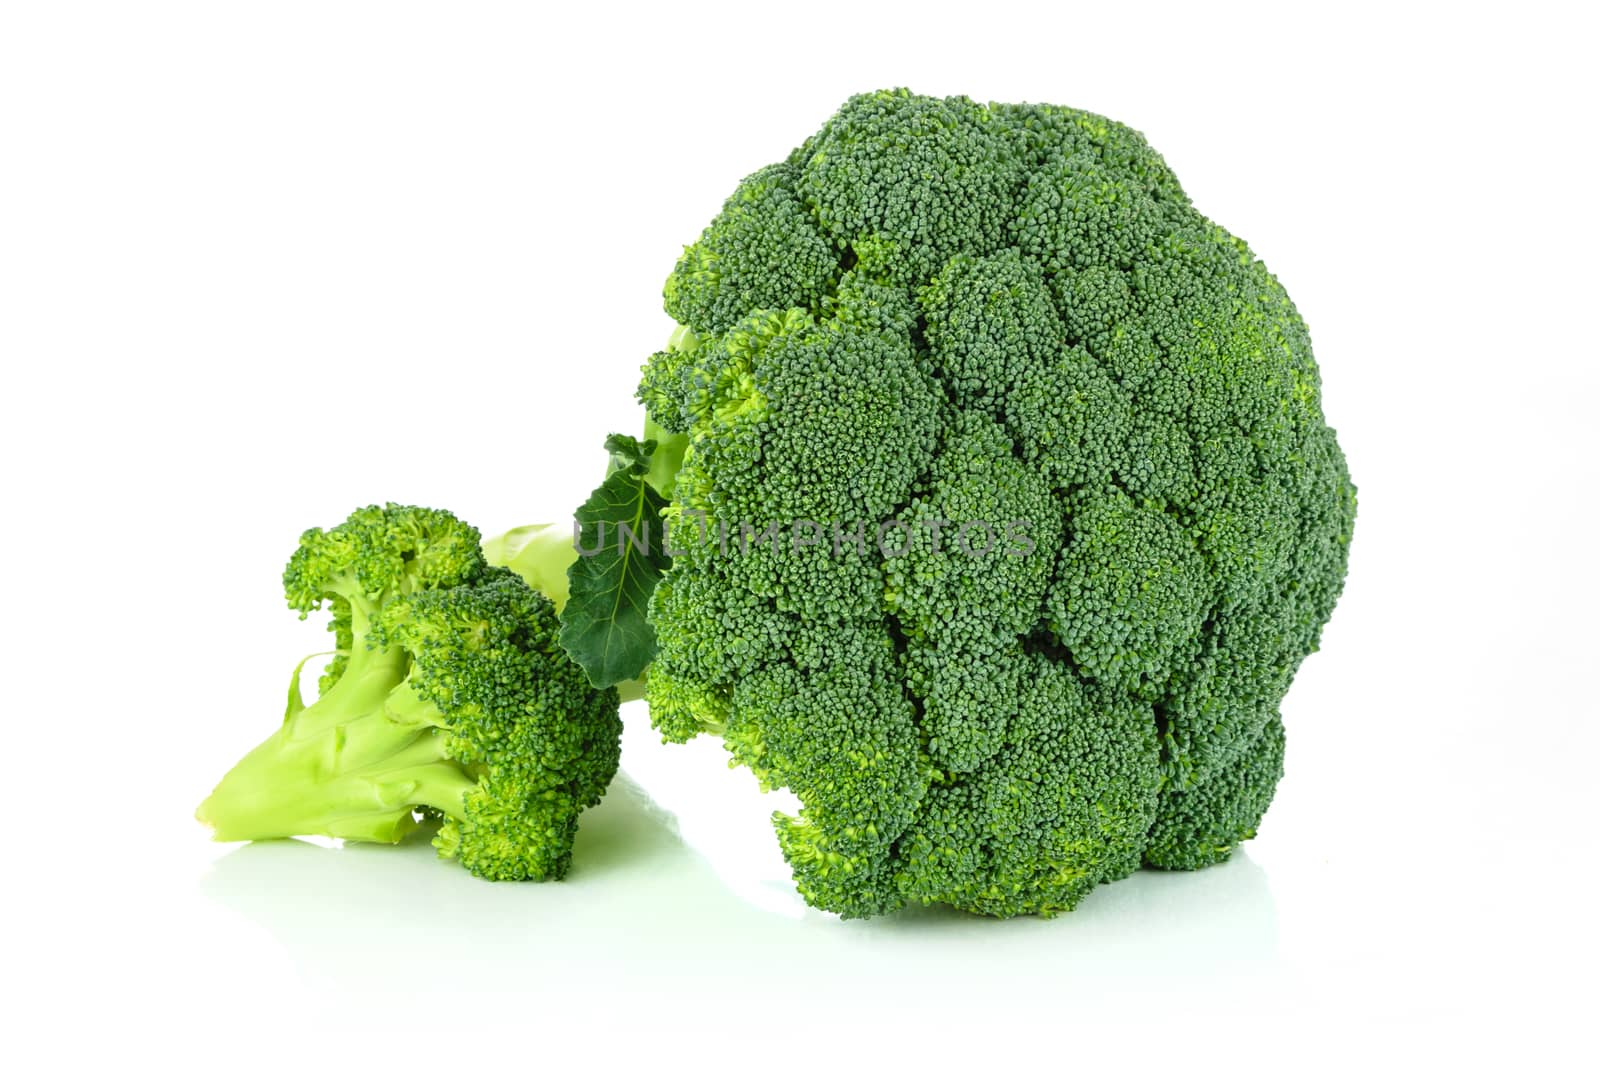 Fresh green broccoli  by wdnet_studio